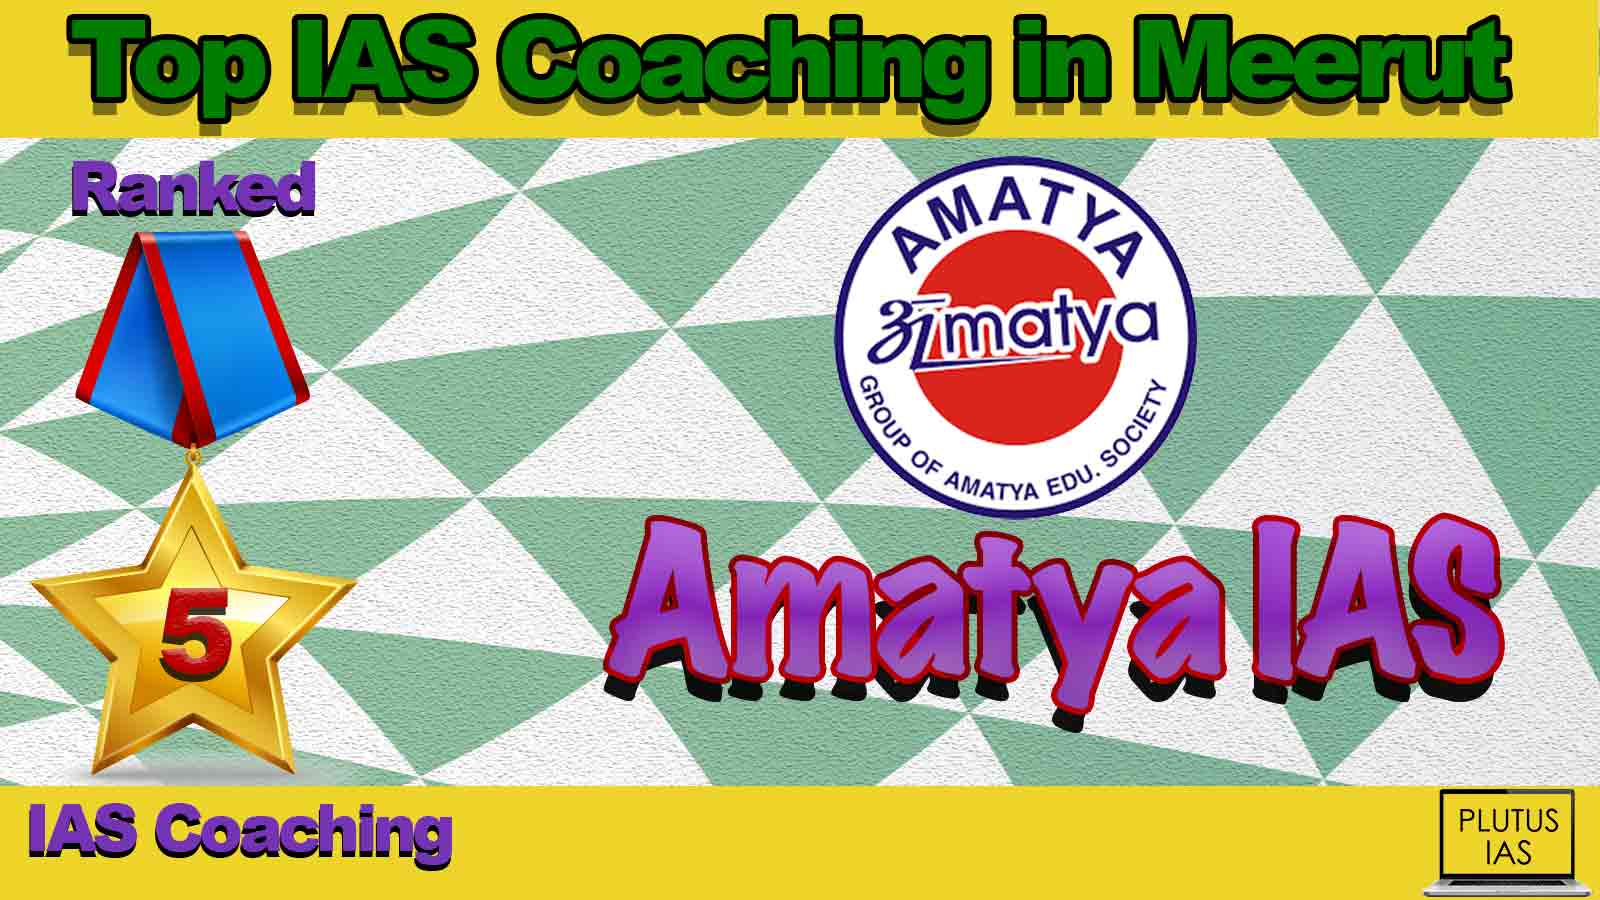 Best IAS Coaching in Meerut